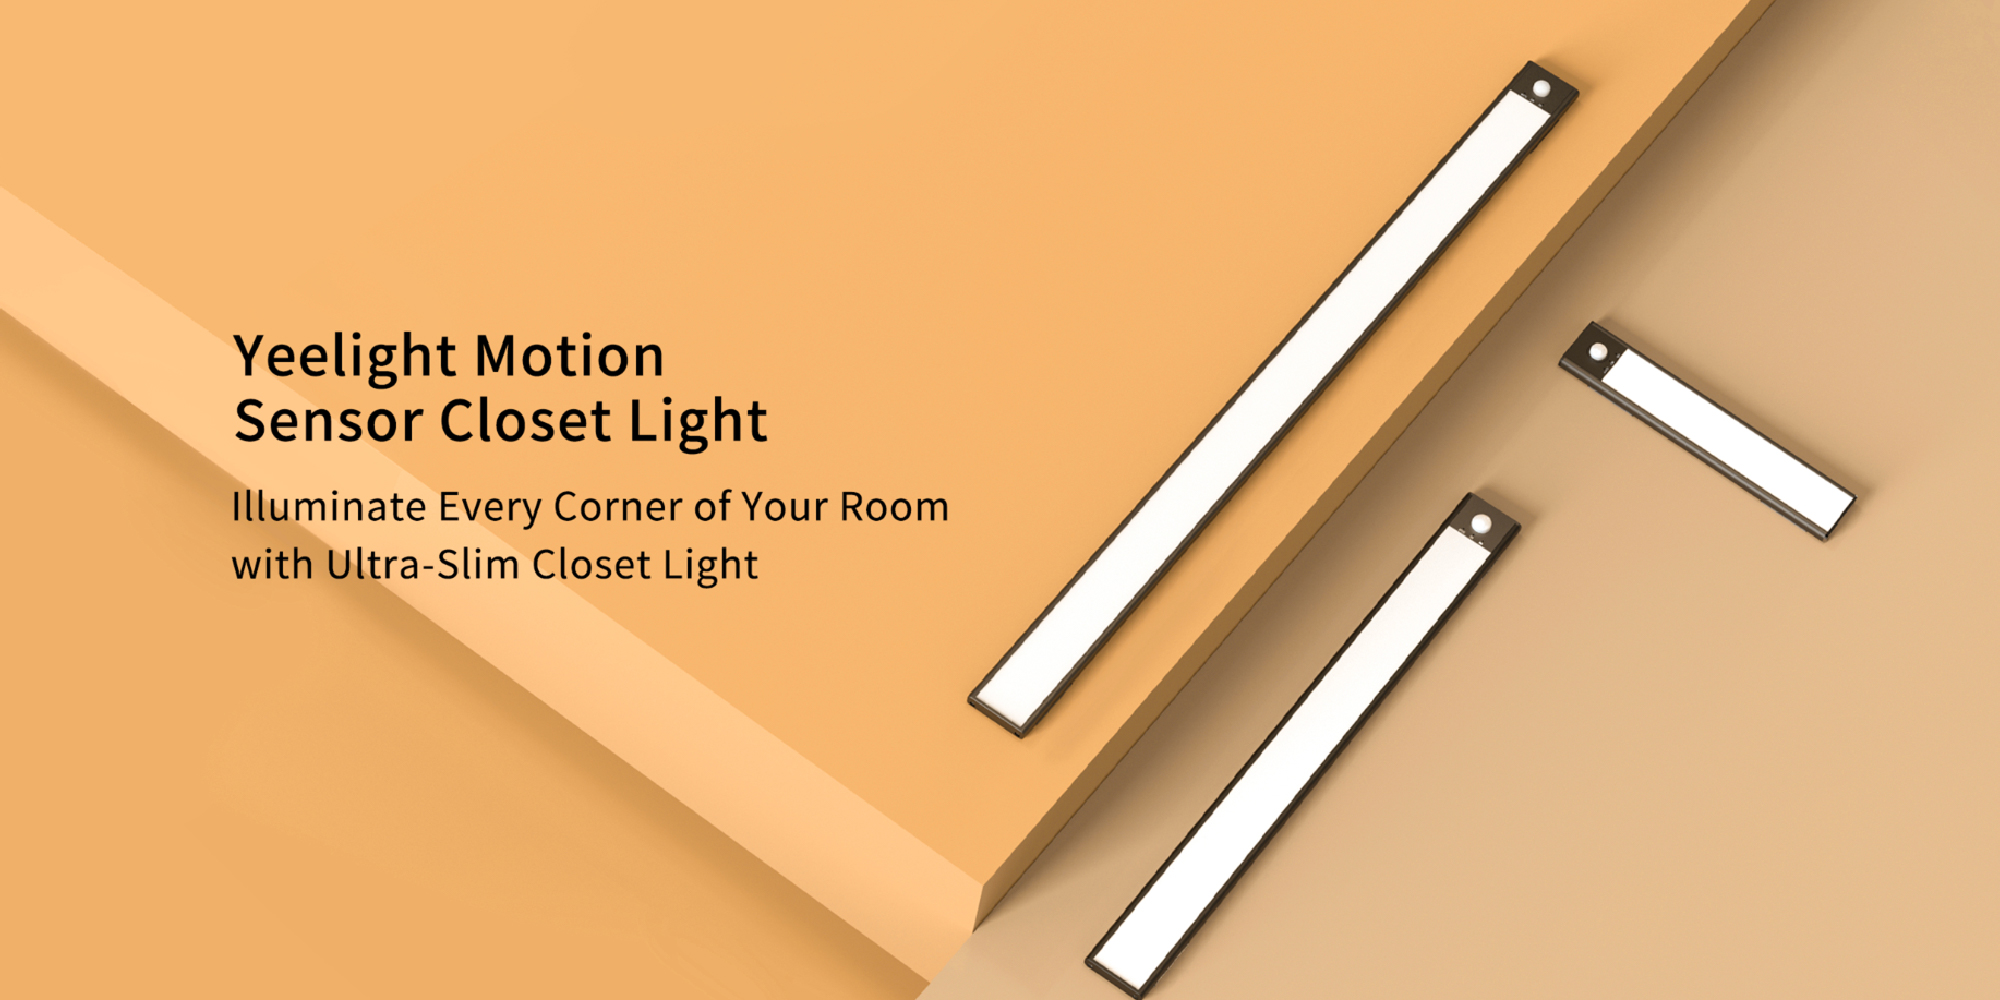 Yeelight Motion Sensor Closet Light: Dimmable Ambiance Lighting, 2700K Warm Lighting with a Soft Glow, Hands-Free Lighting